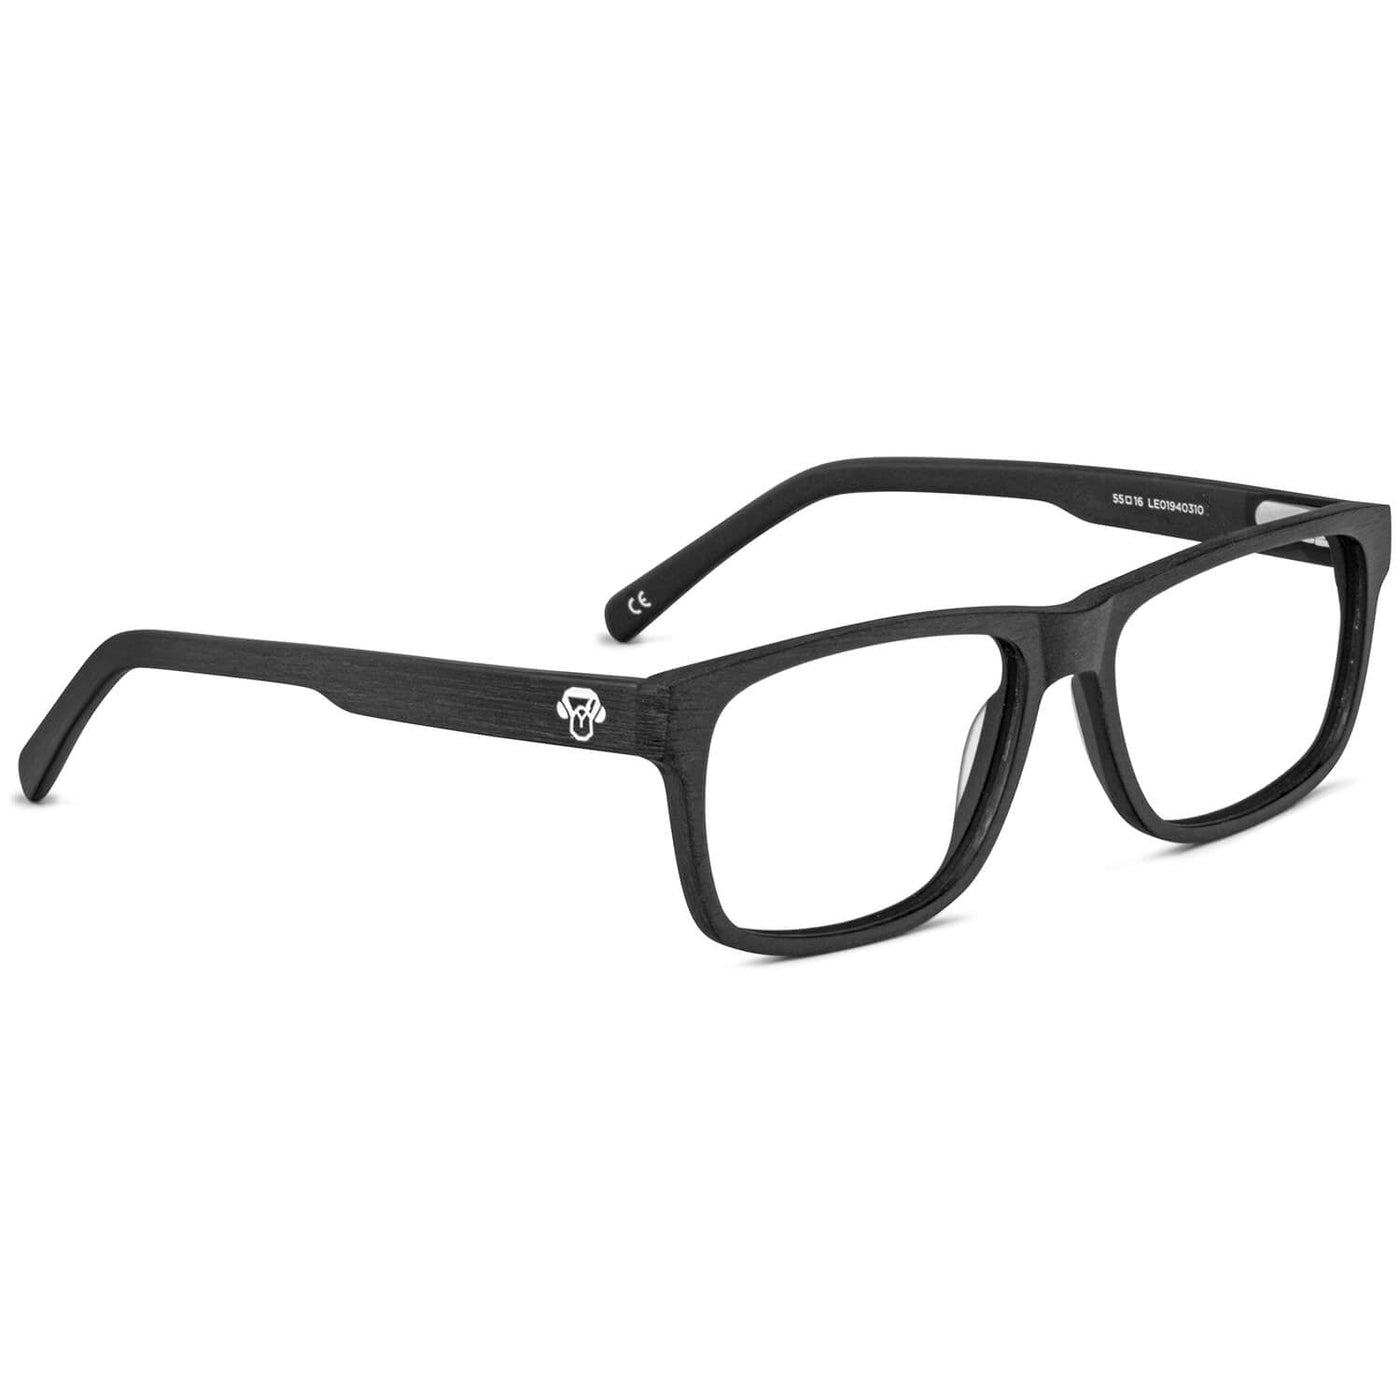 marco optico rectangular canelo de color negro para hombre y mujer que necesitan usar receta óptica para miopia o astigmatismo presbicia. Lentes de lectura gratis